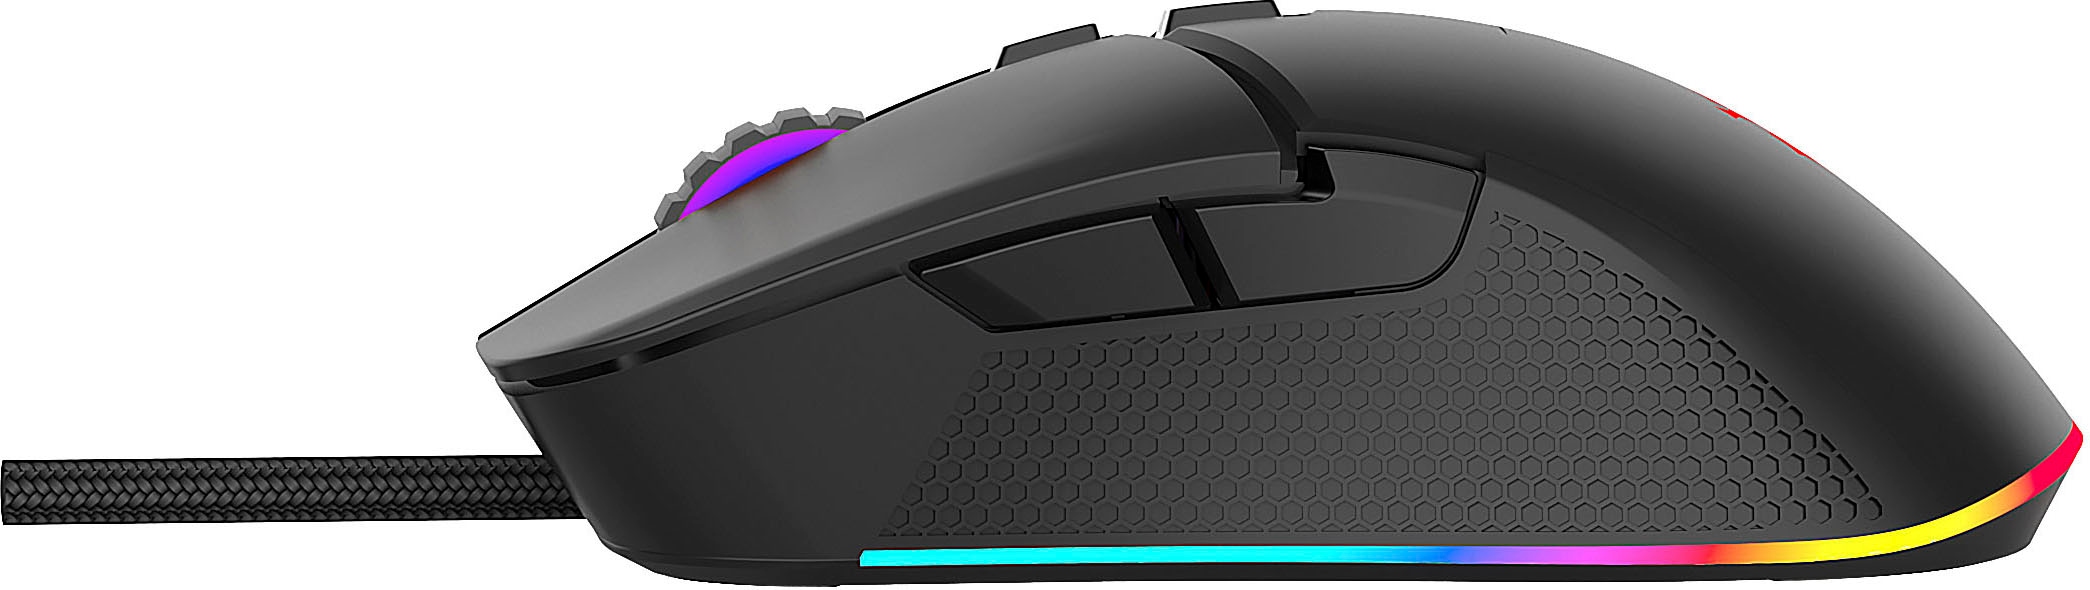 Hyrican Gaming-Maus »Stiker Gaming-Maus, RGB LED Beleuchtung, USB,  kabelgebunden« online bestellen | UNIVERSAL | PC-Mäuse